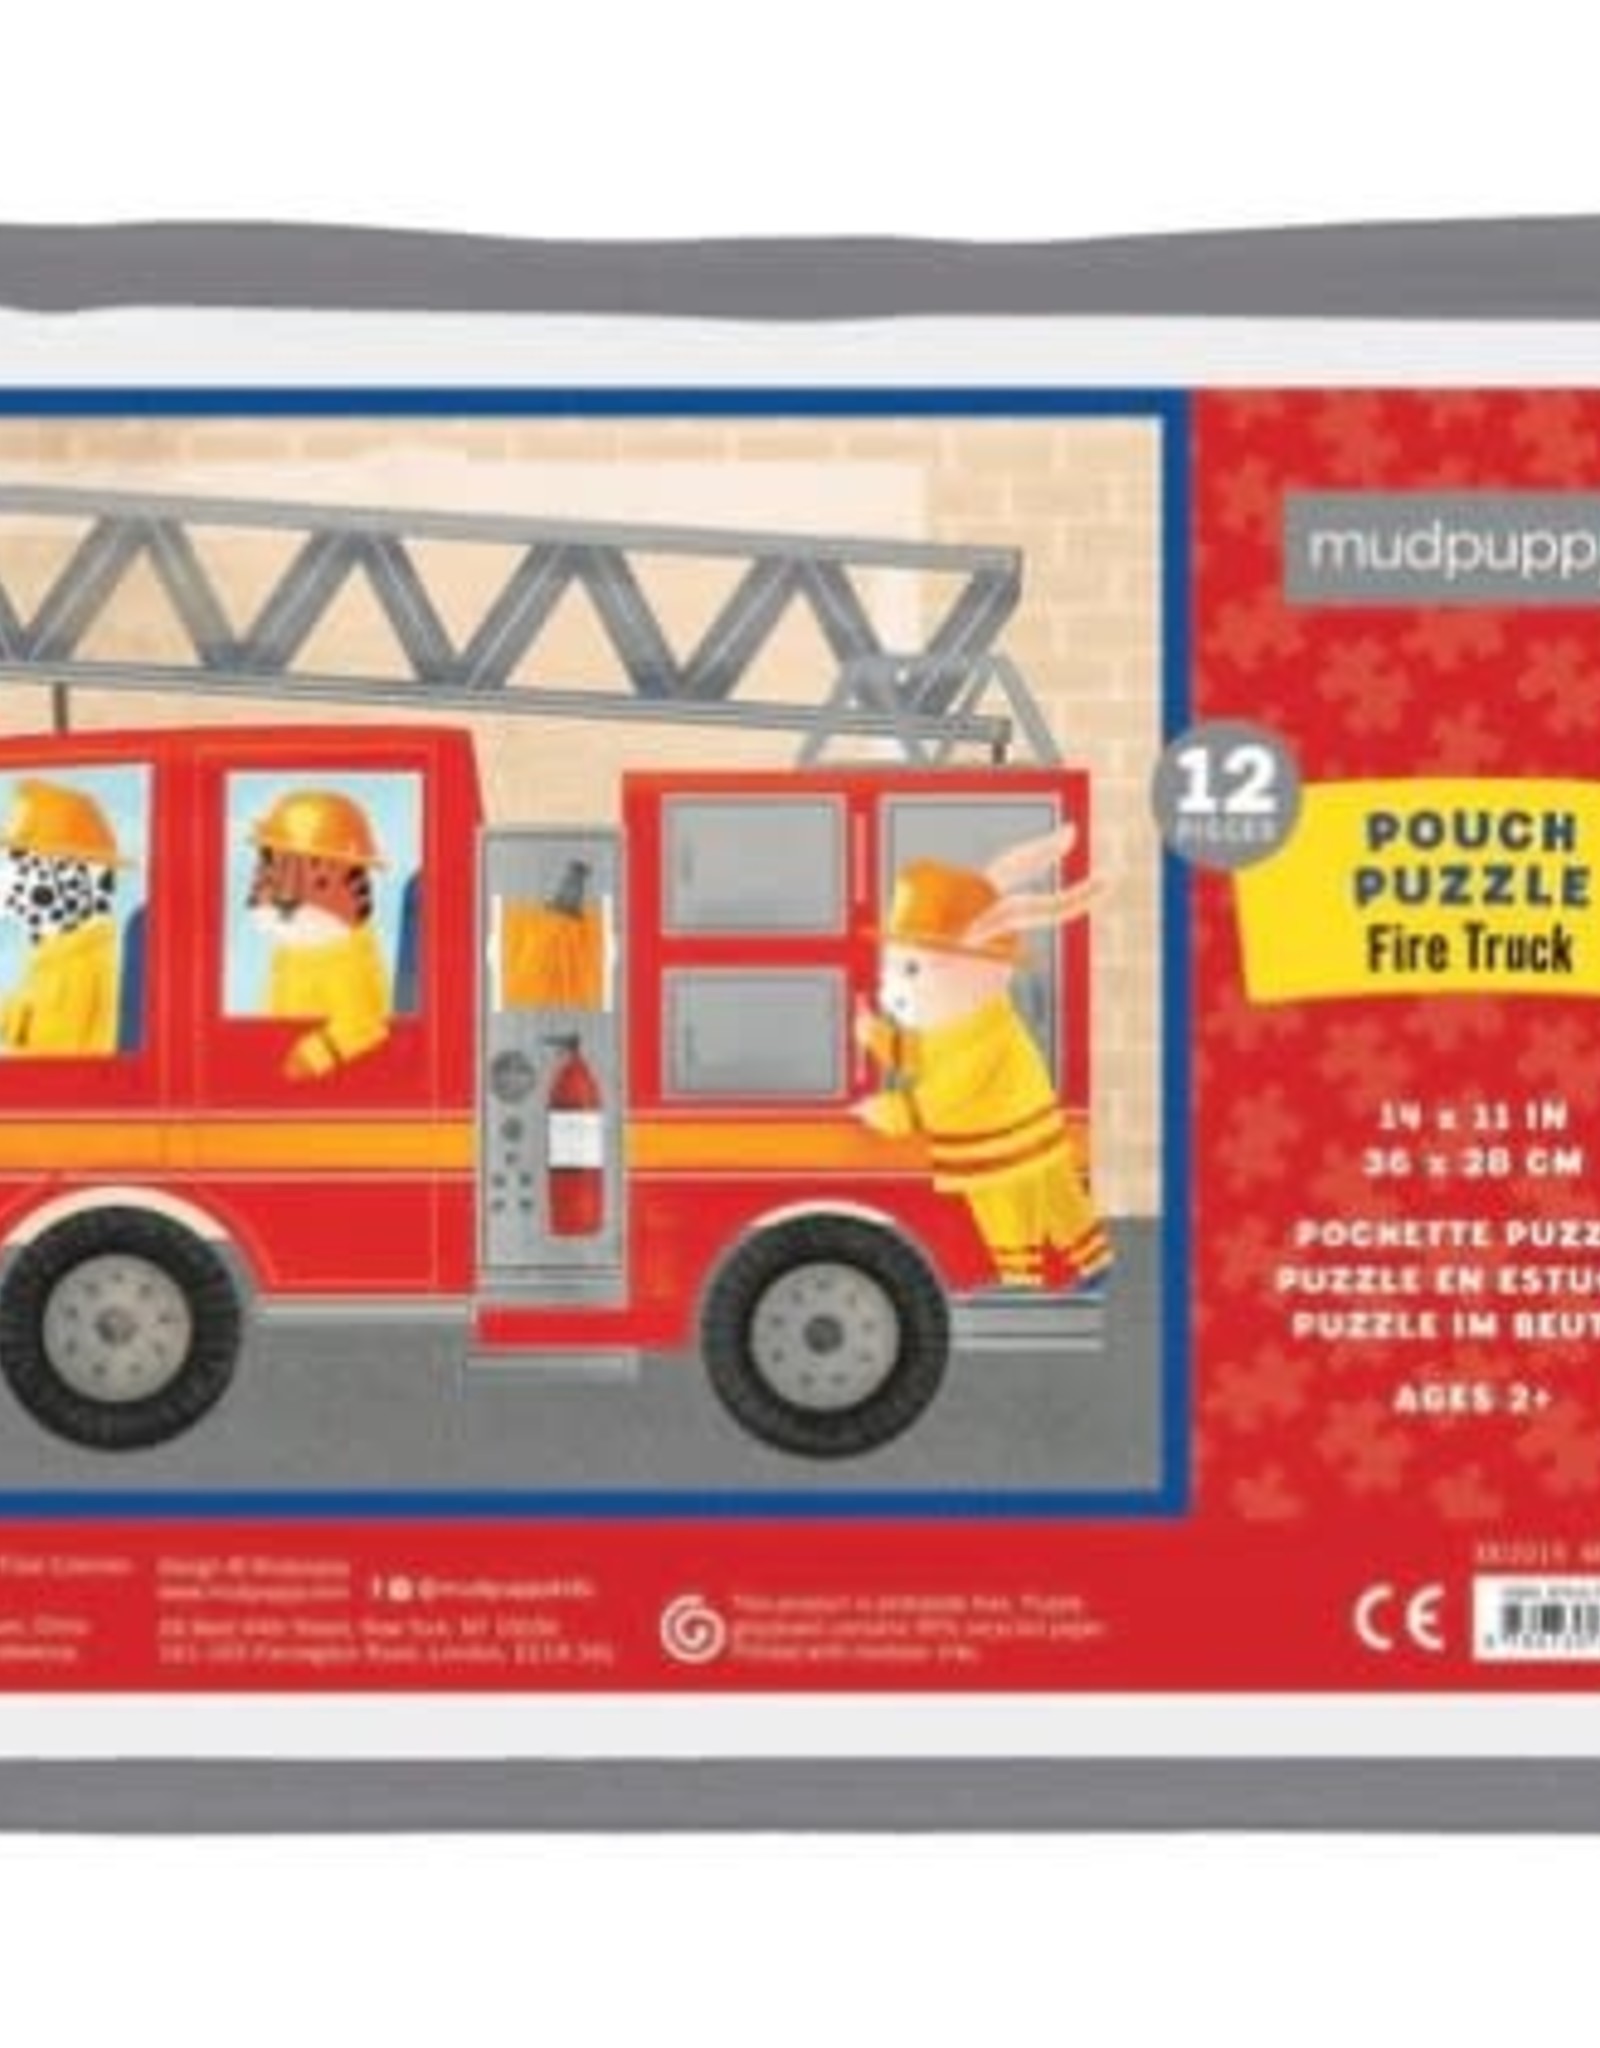 Mudpuppy Fire Truck 12-pc Pouch Puzzle